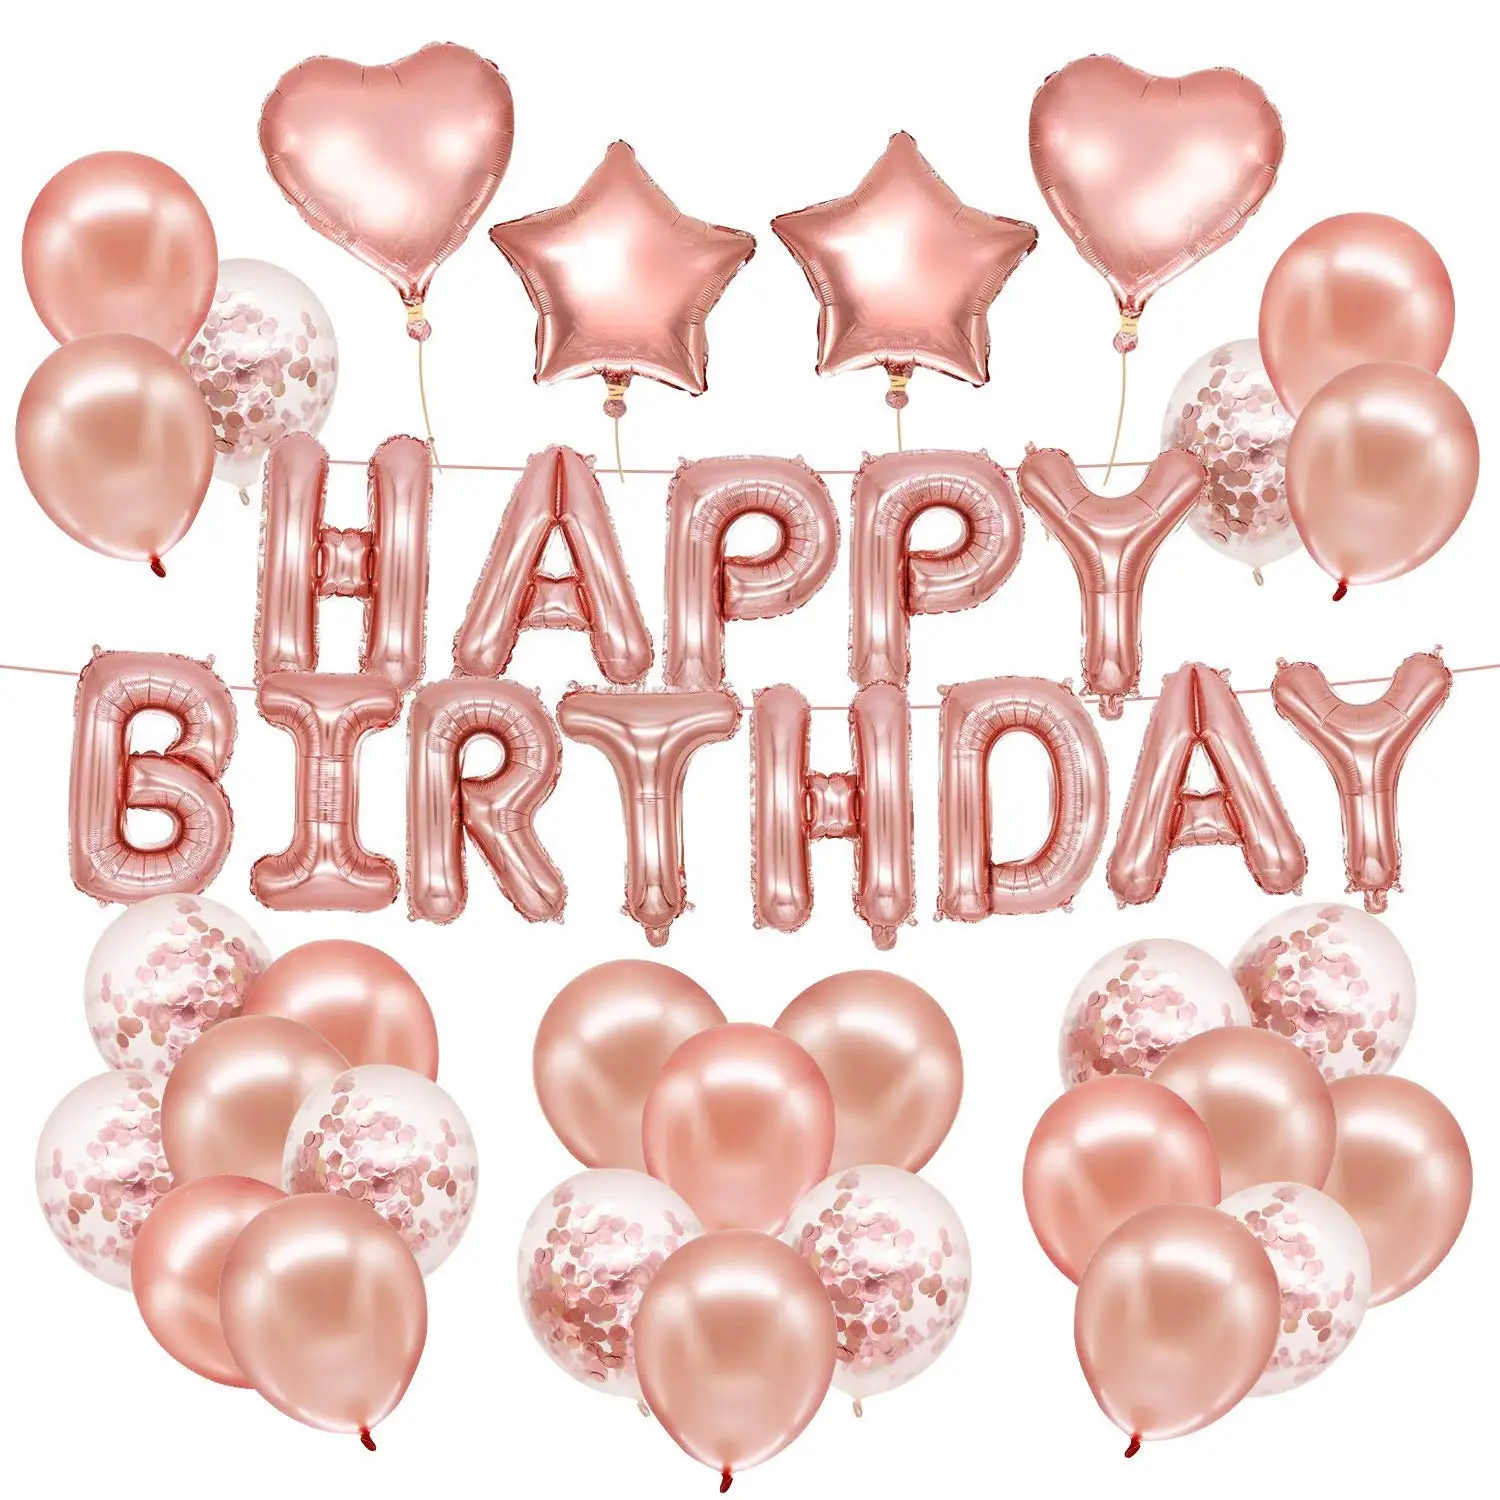 BO 10PCS 12inch Foil Latex Rose Gold Confetti Ballons Happy Birthday Party Decor